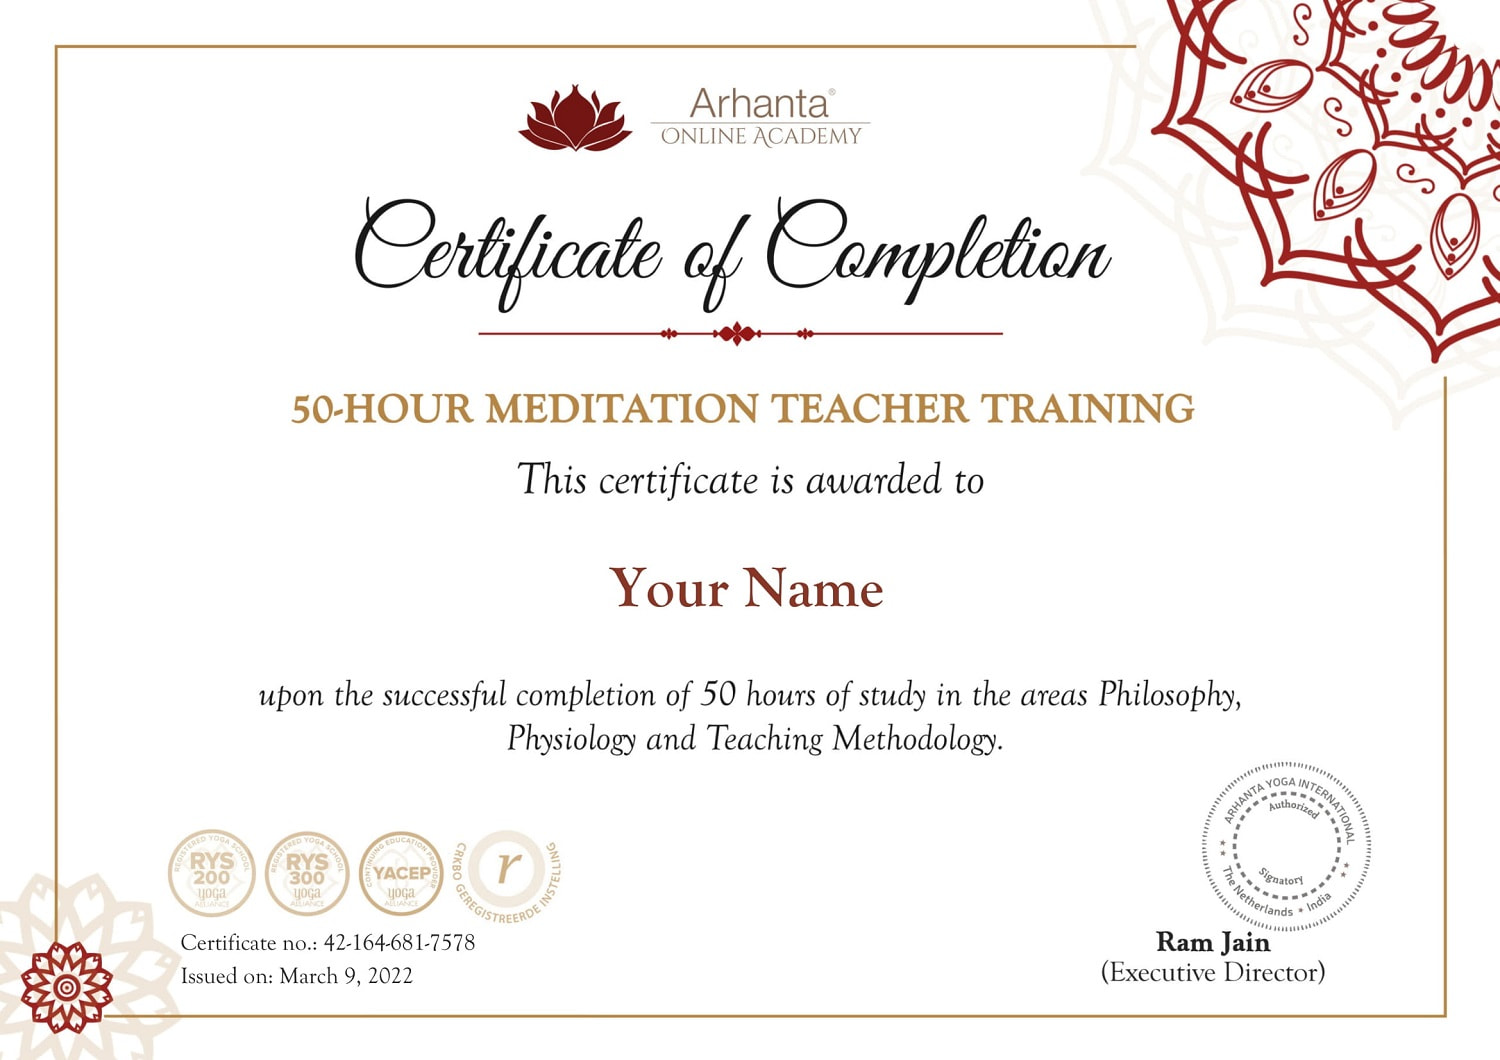 Certificato di formazione per insegnanti di meditazione di 50 ore